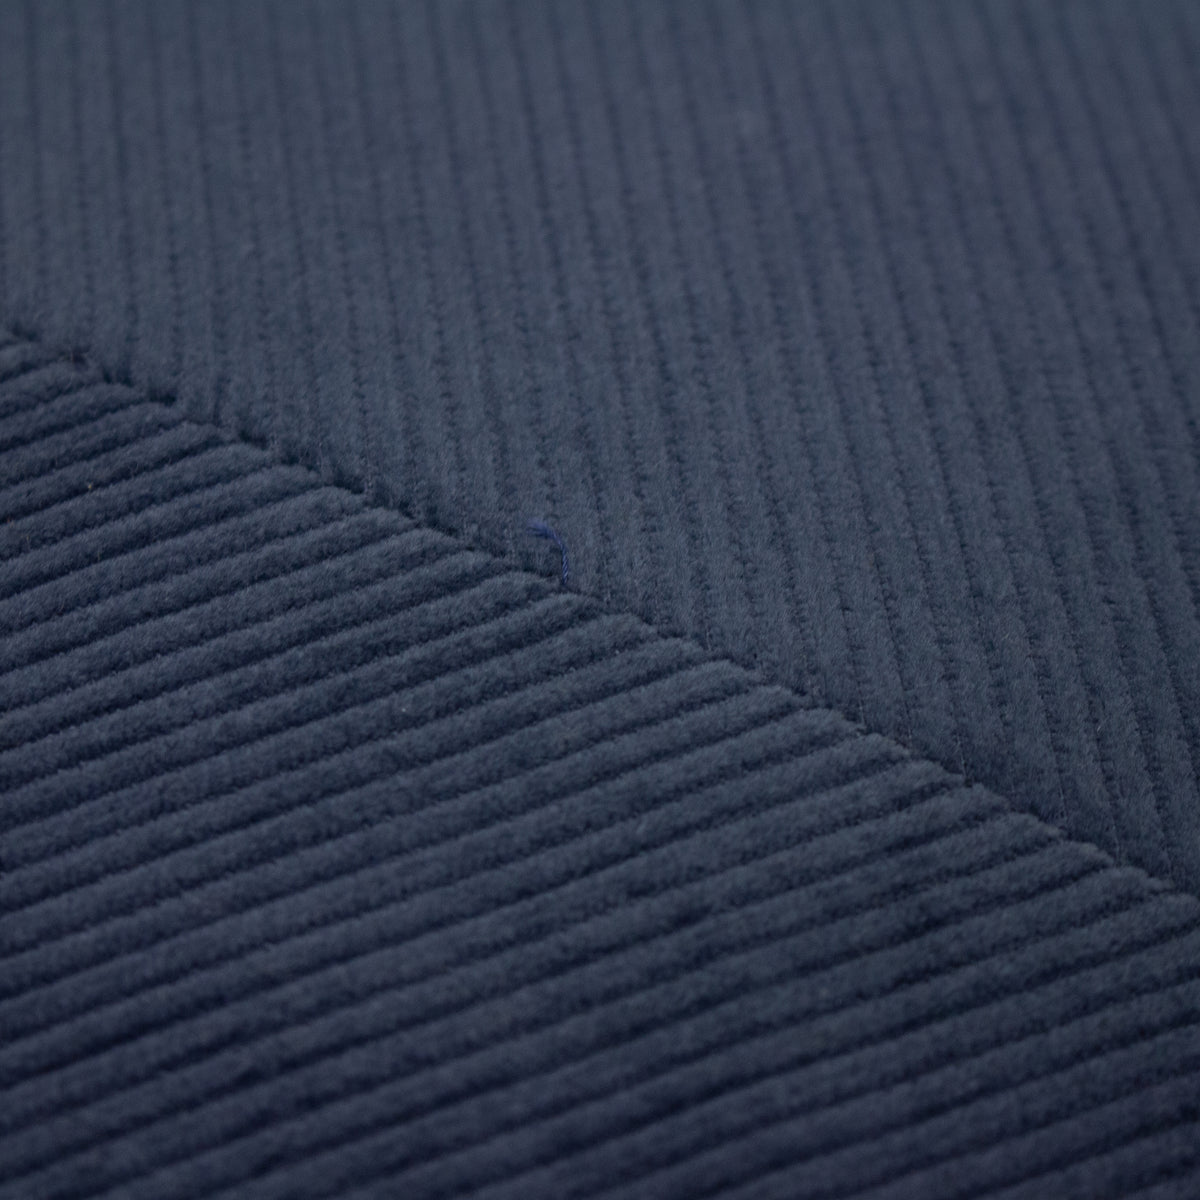 Sisson Polyester Cushion | Navy